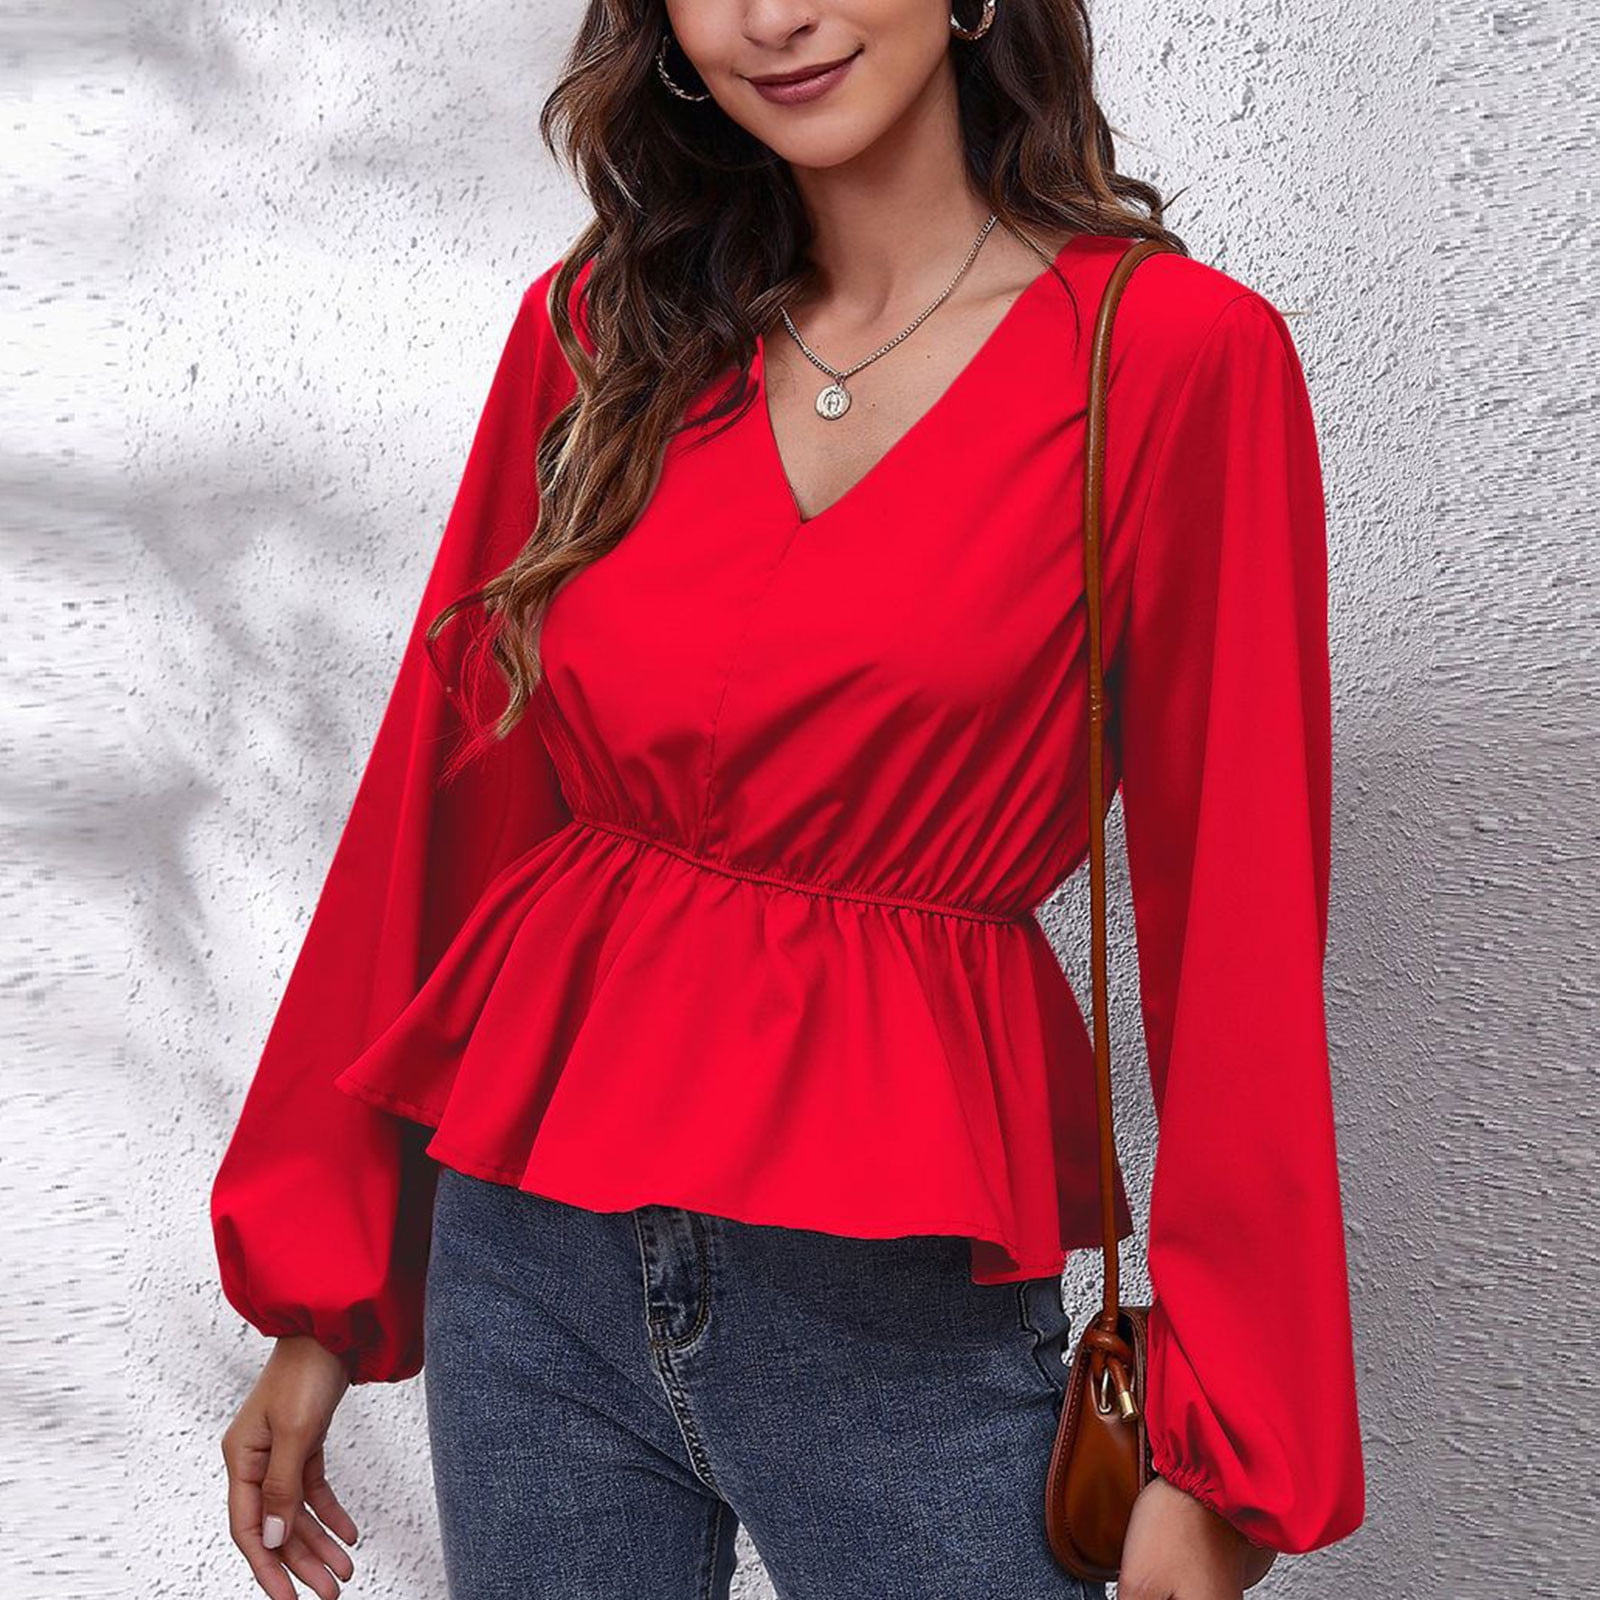 TIHLMK Sleeve Blouse Deals Clearance Women's Autumn Winter V-Neck Lantern Sleeve Chiffon Shirt Color Waist Long-Sleeved Top Red - Walmart.com